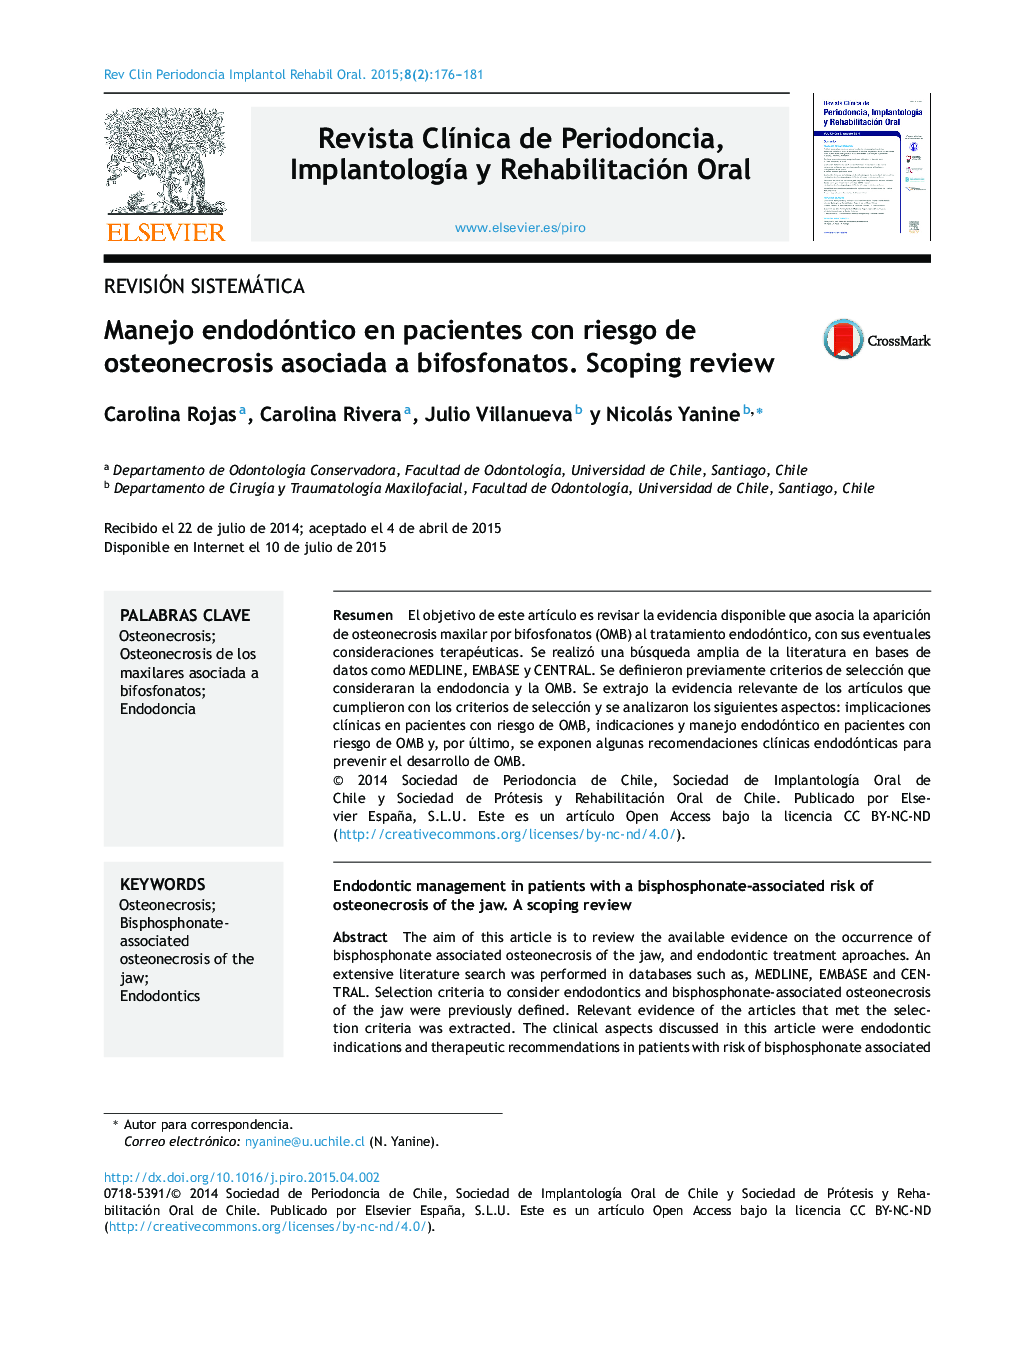 Manejo endodóntico en pacientes con riesgo de osteonecrosis asociada a bifosfonatos. Scoping review